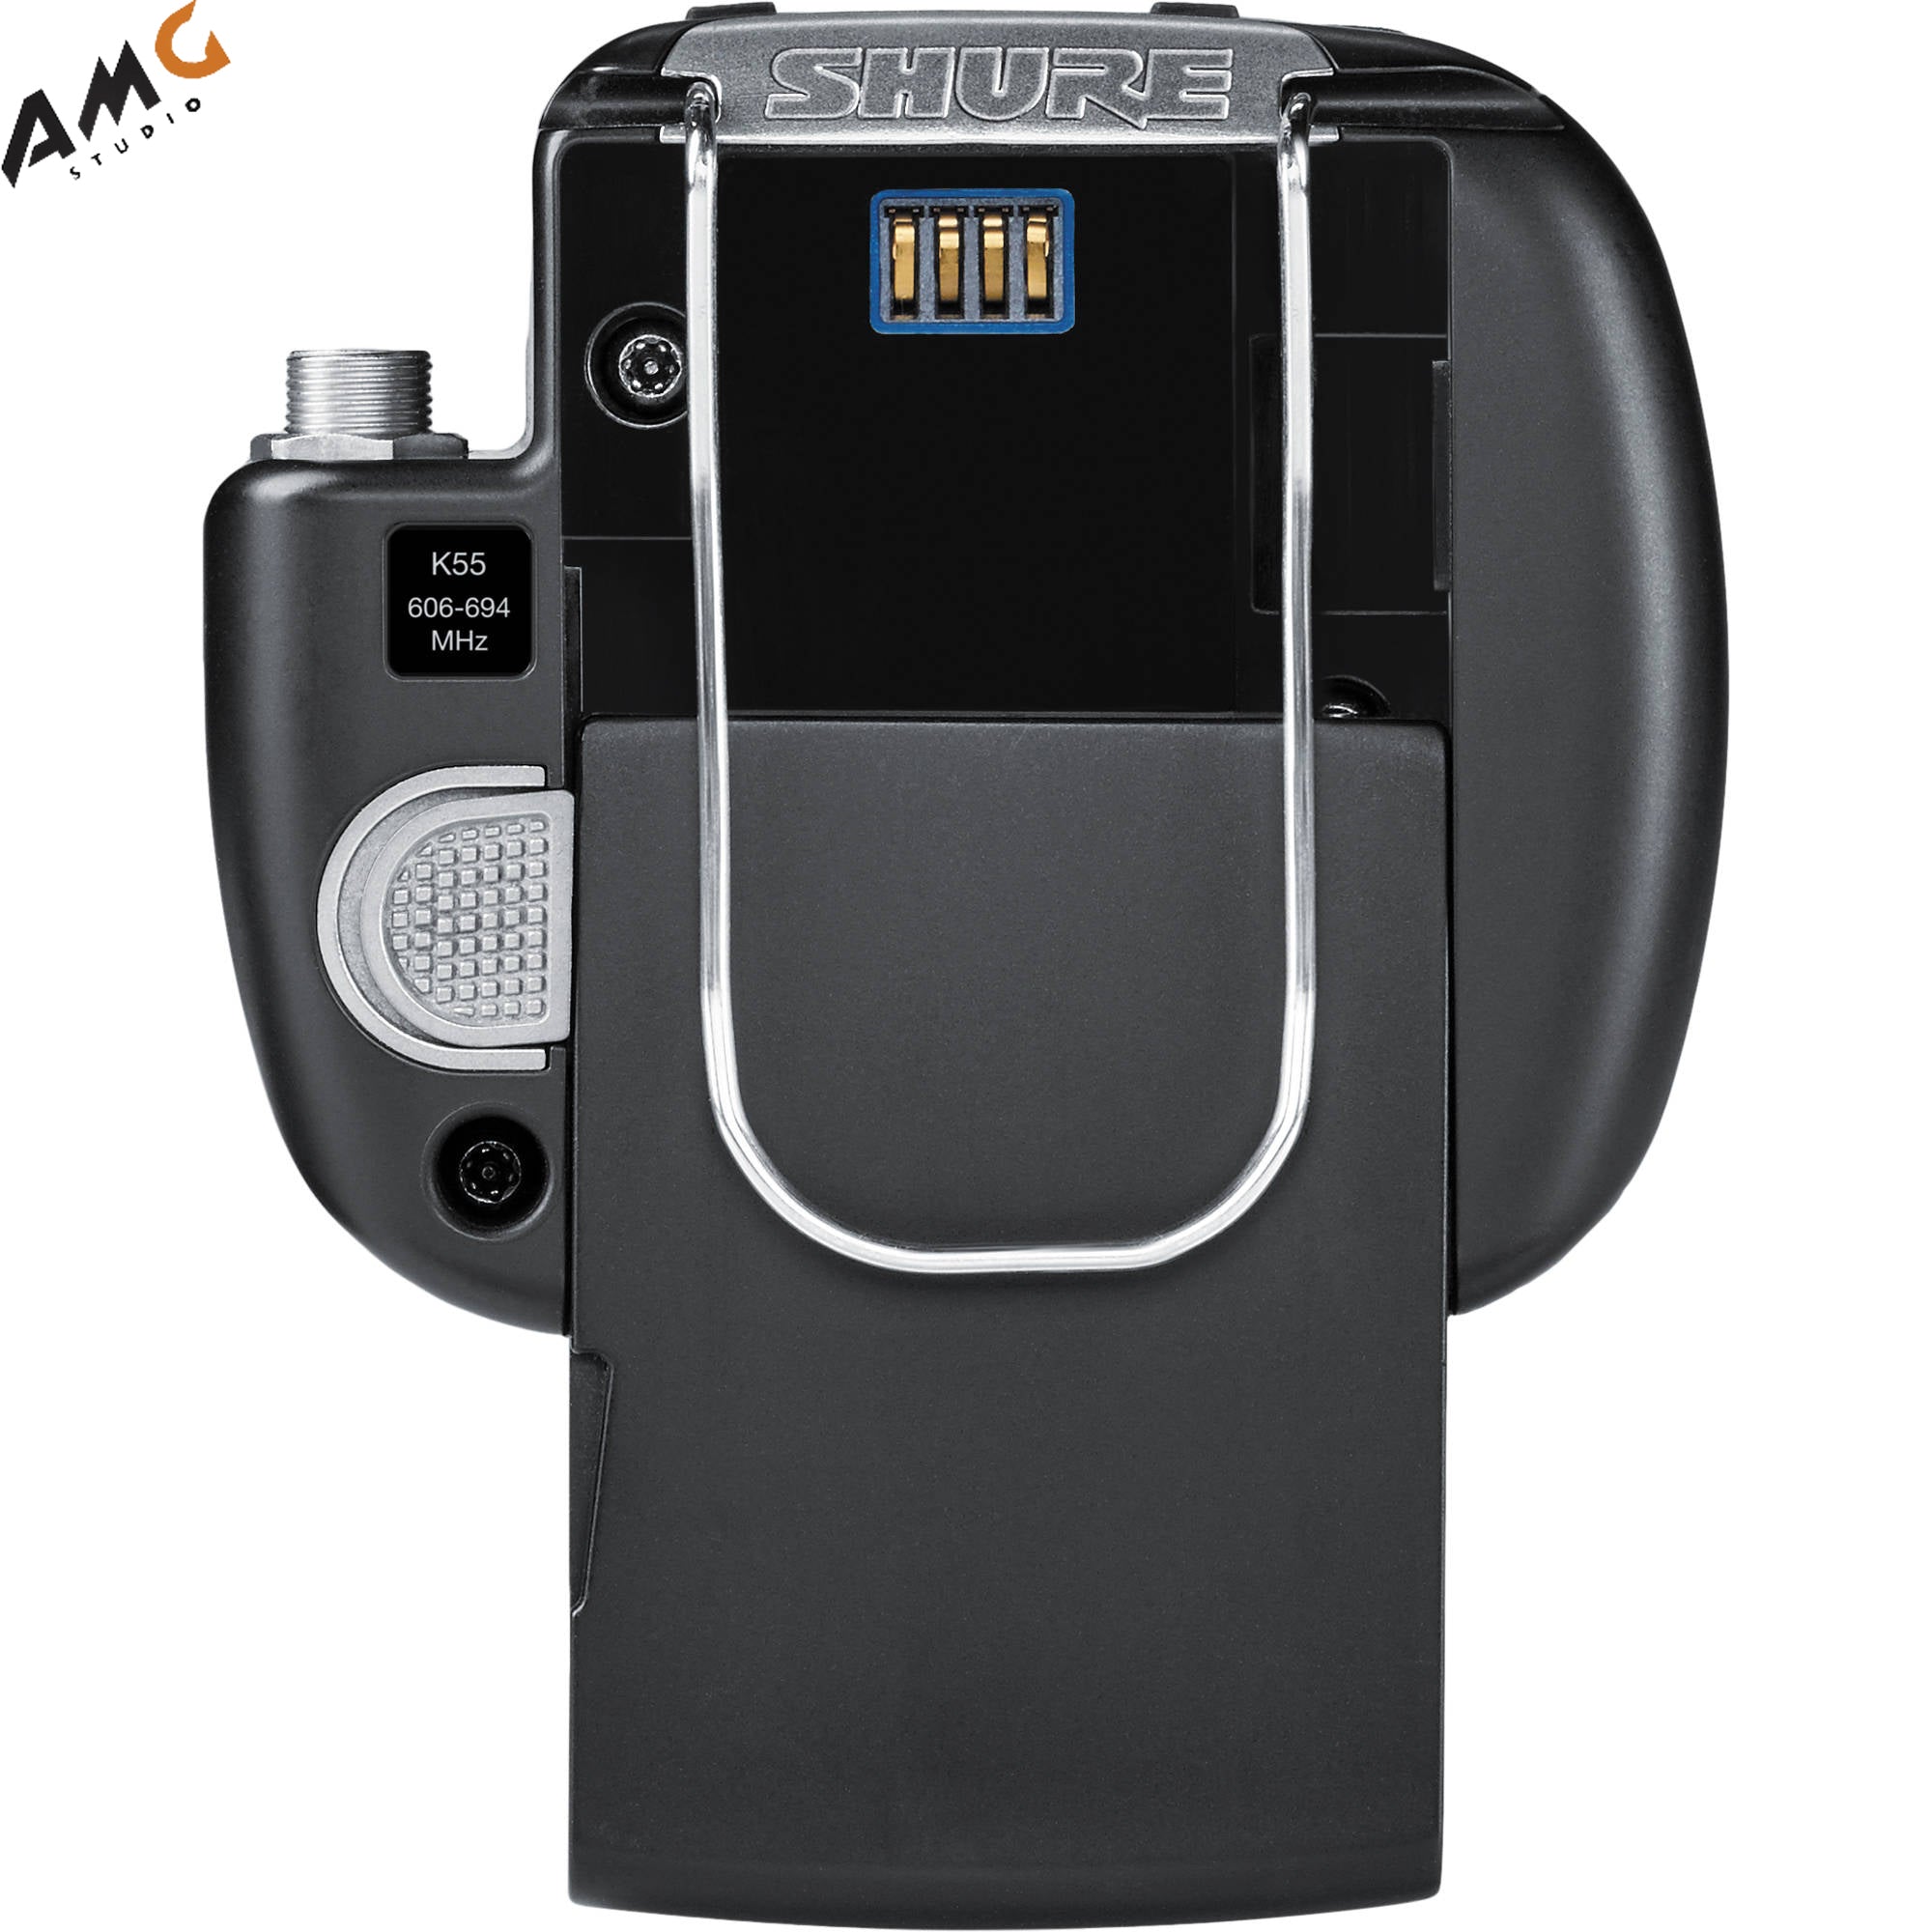 Shure ADX1M Digital Micro Bodypack Wireless Transmitter (G57: 470 to 608 MHz) - Studio AMG